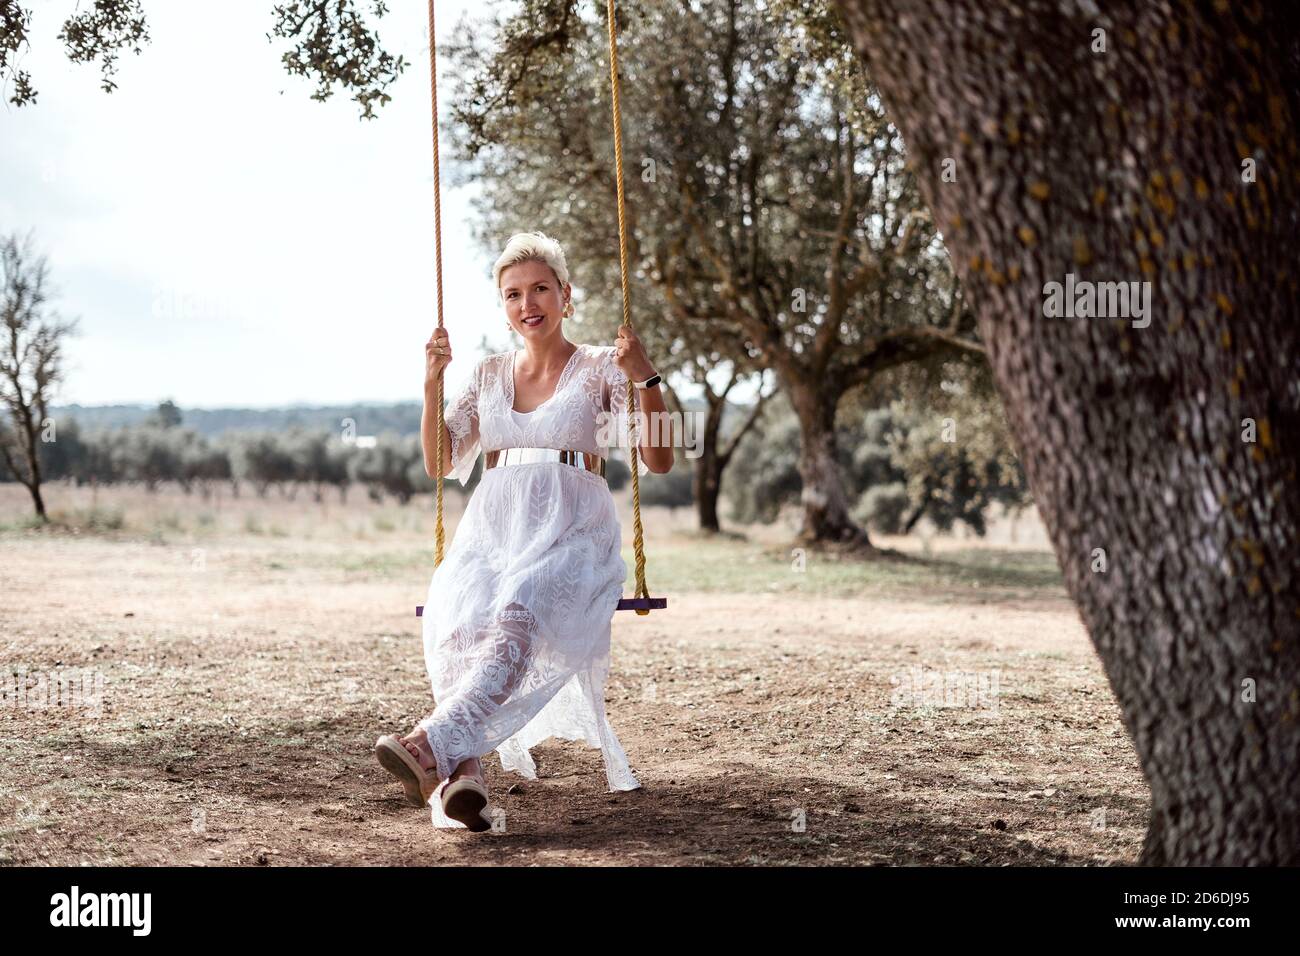 Romantic pregnant woman on a swing among cork trees Stock Photo